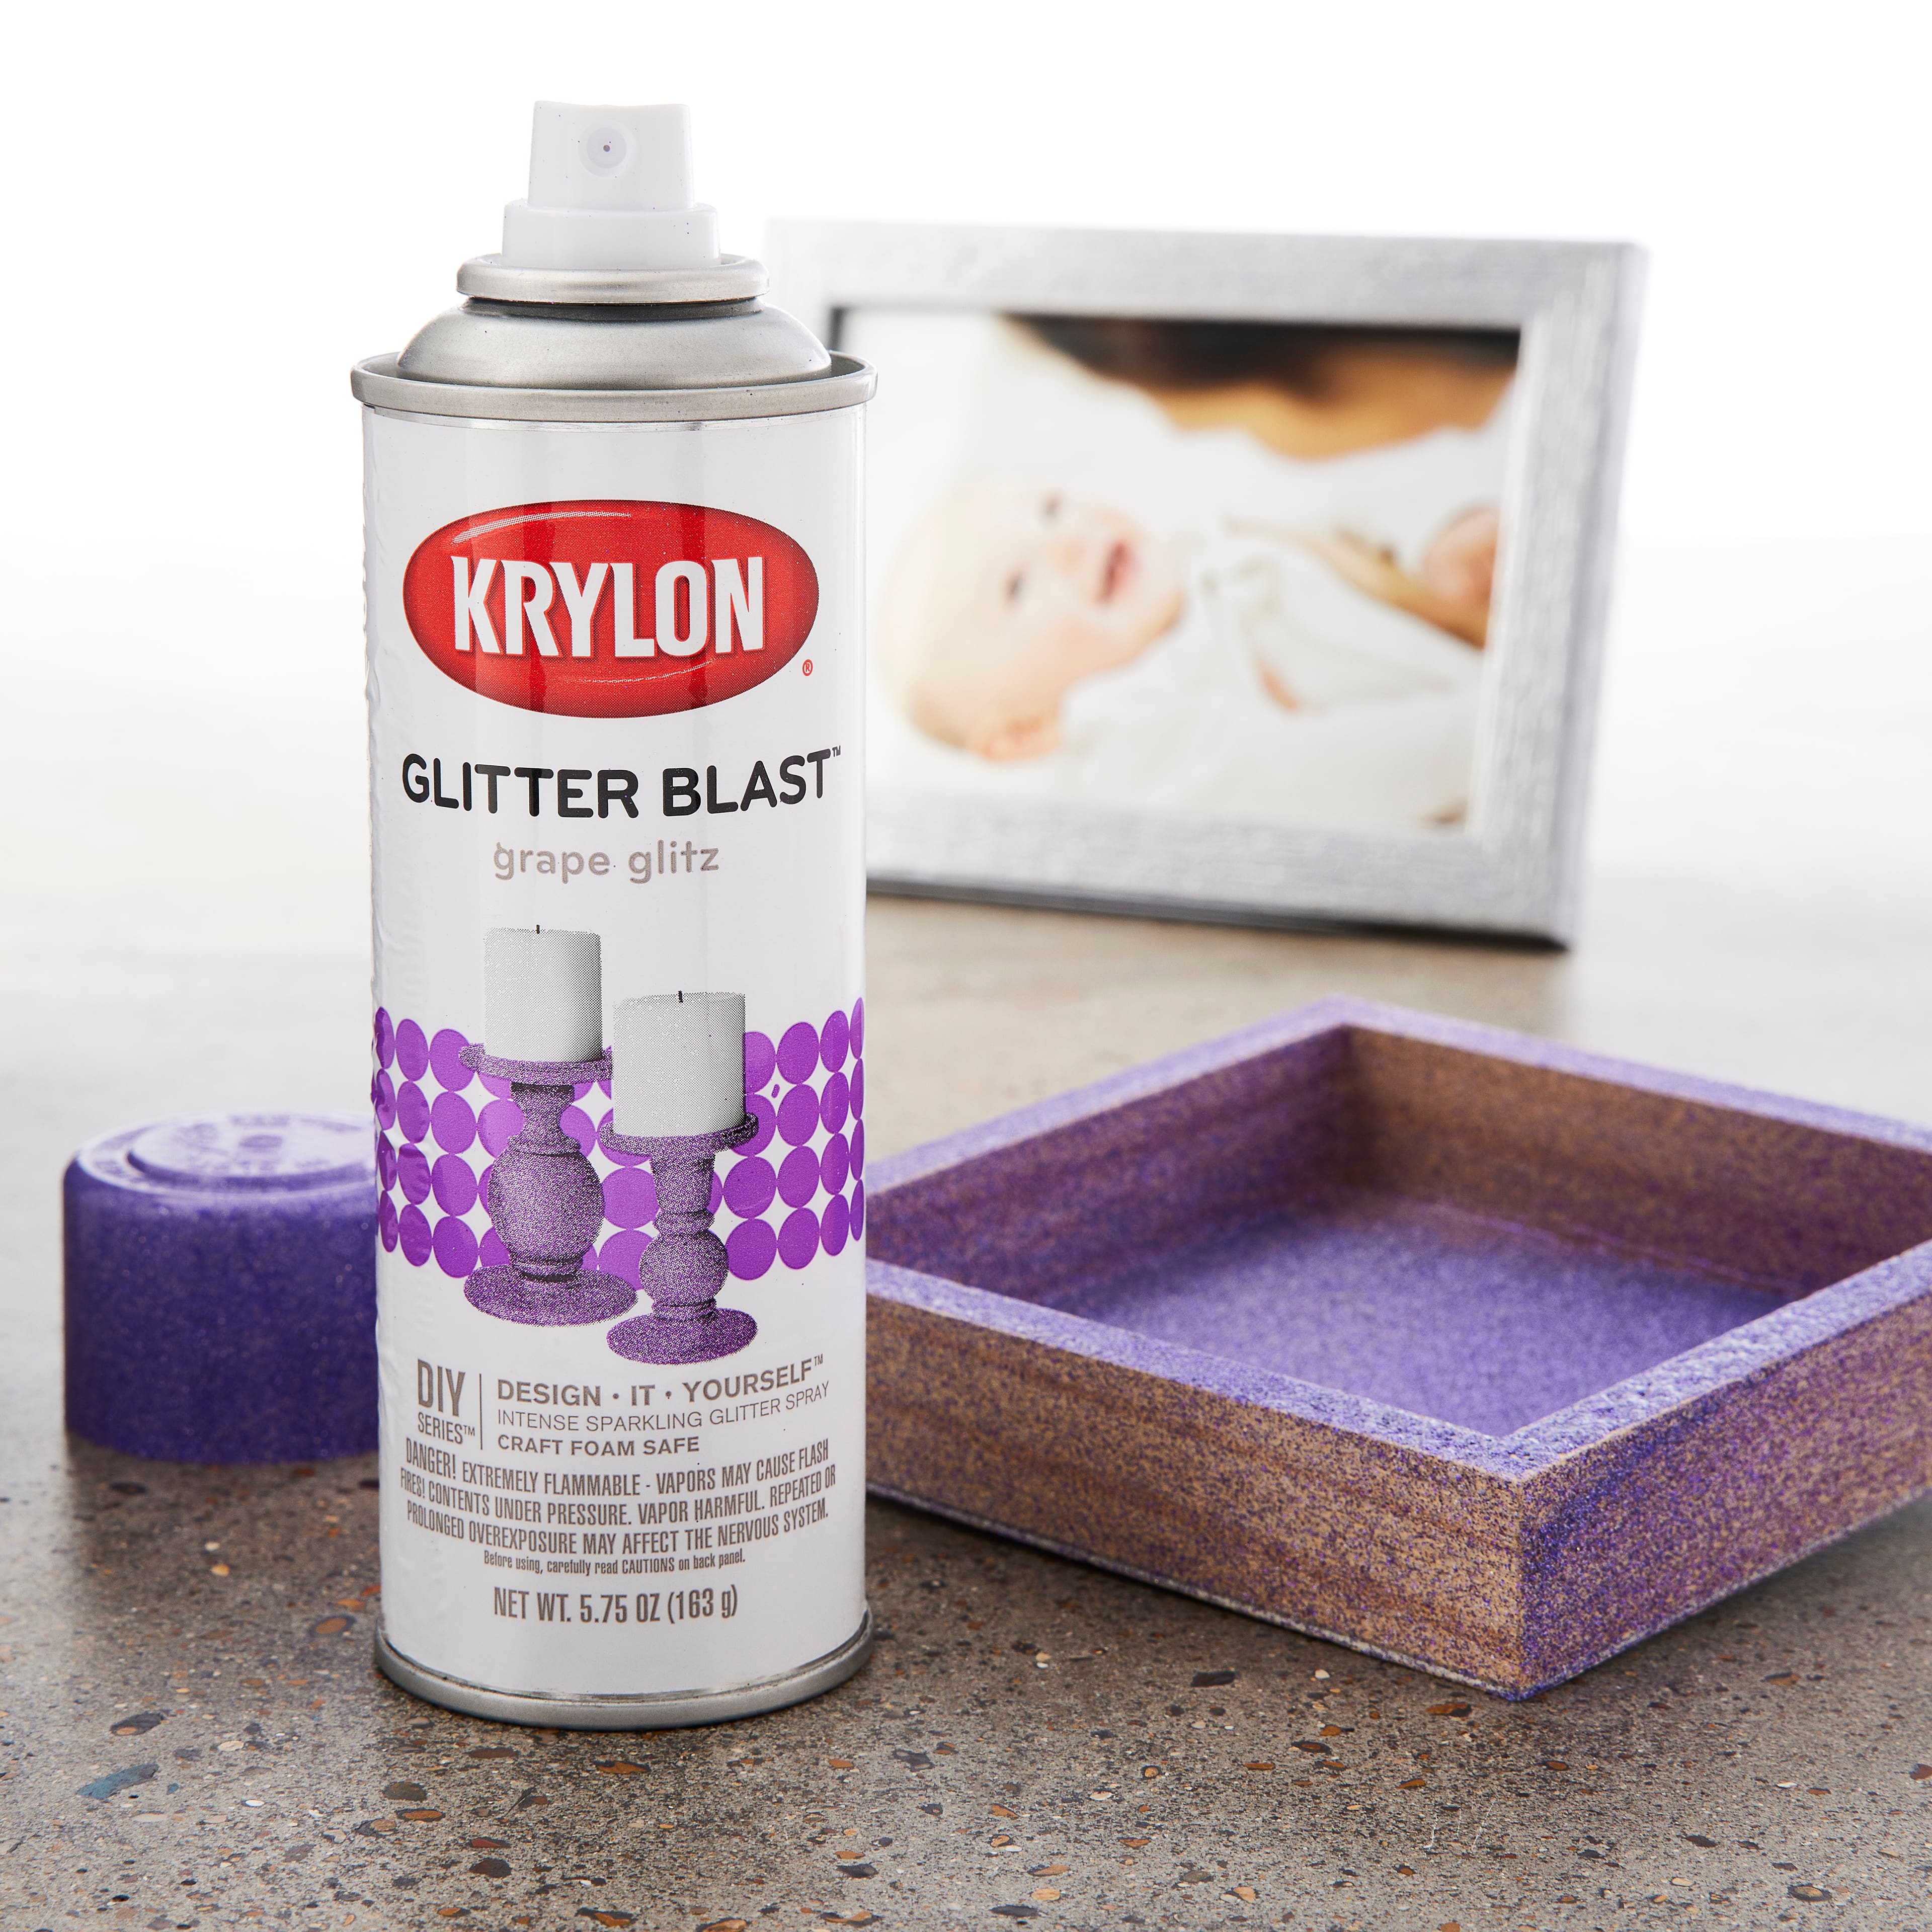 Krylon Glitter Blast Gloss Clear Glitter Spray Paint (NET WT. 6-oz